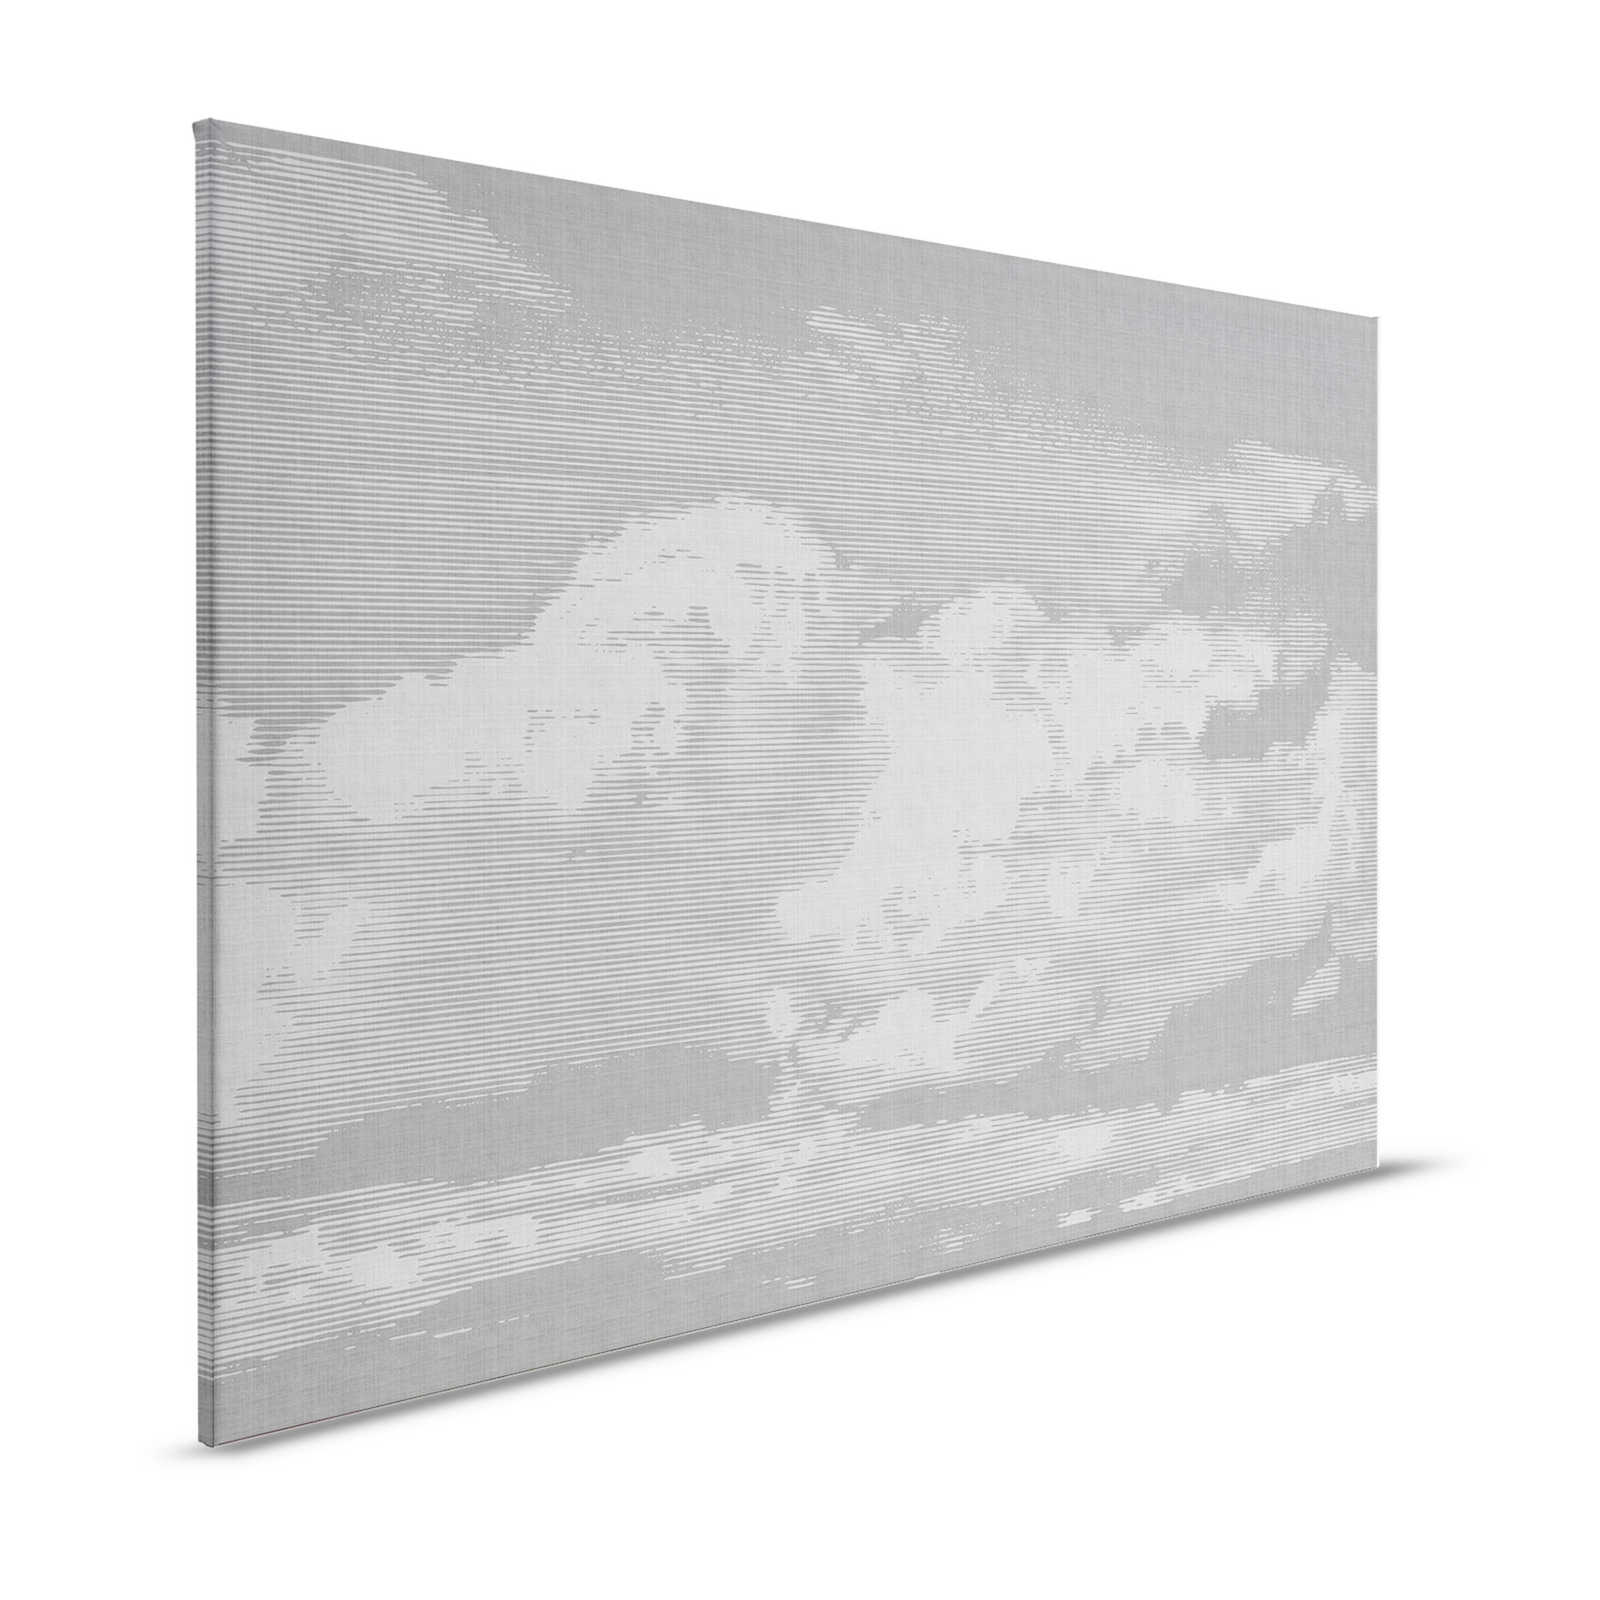 Nubes 2 - Cuadro de lienzo celestial en aspecto de lino natural con motivo de nubes - 1,20 m x 0,80 m
